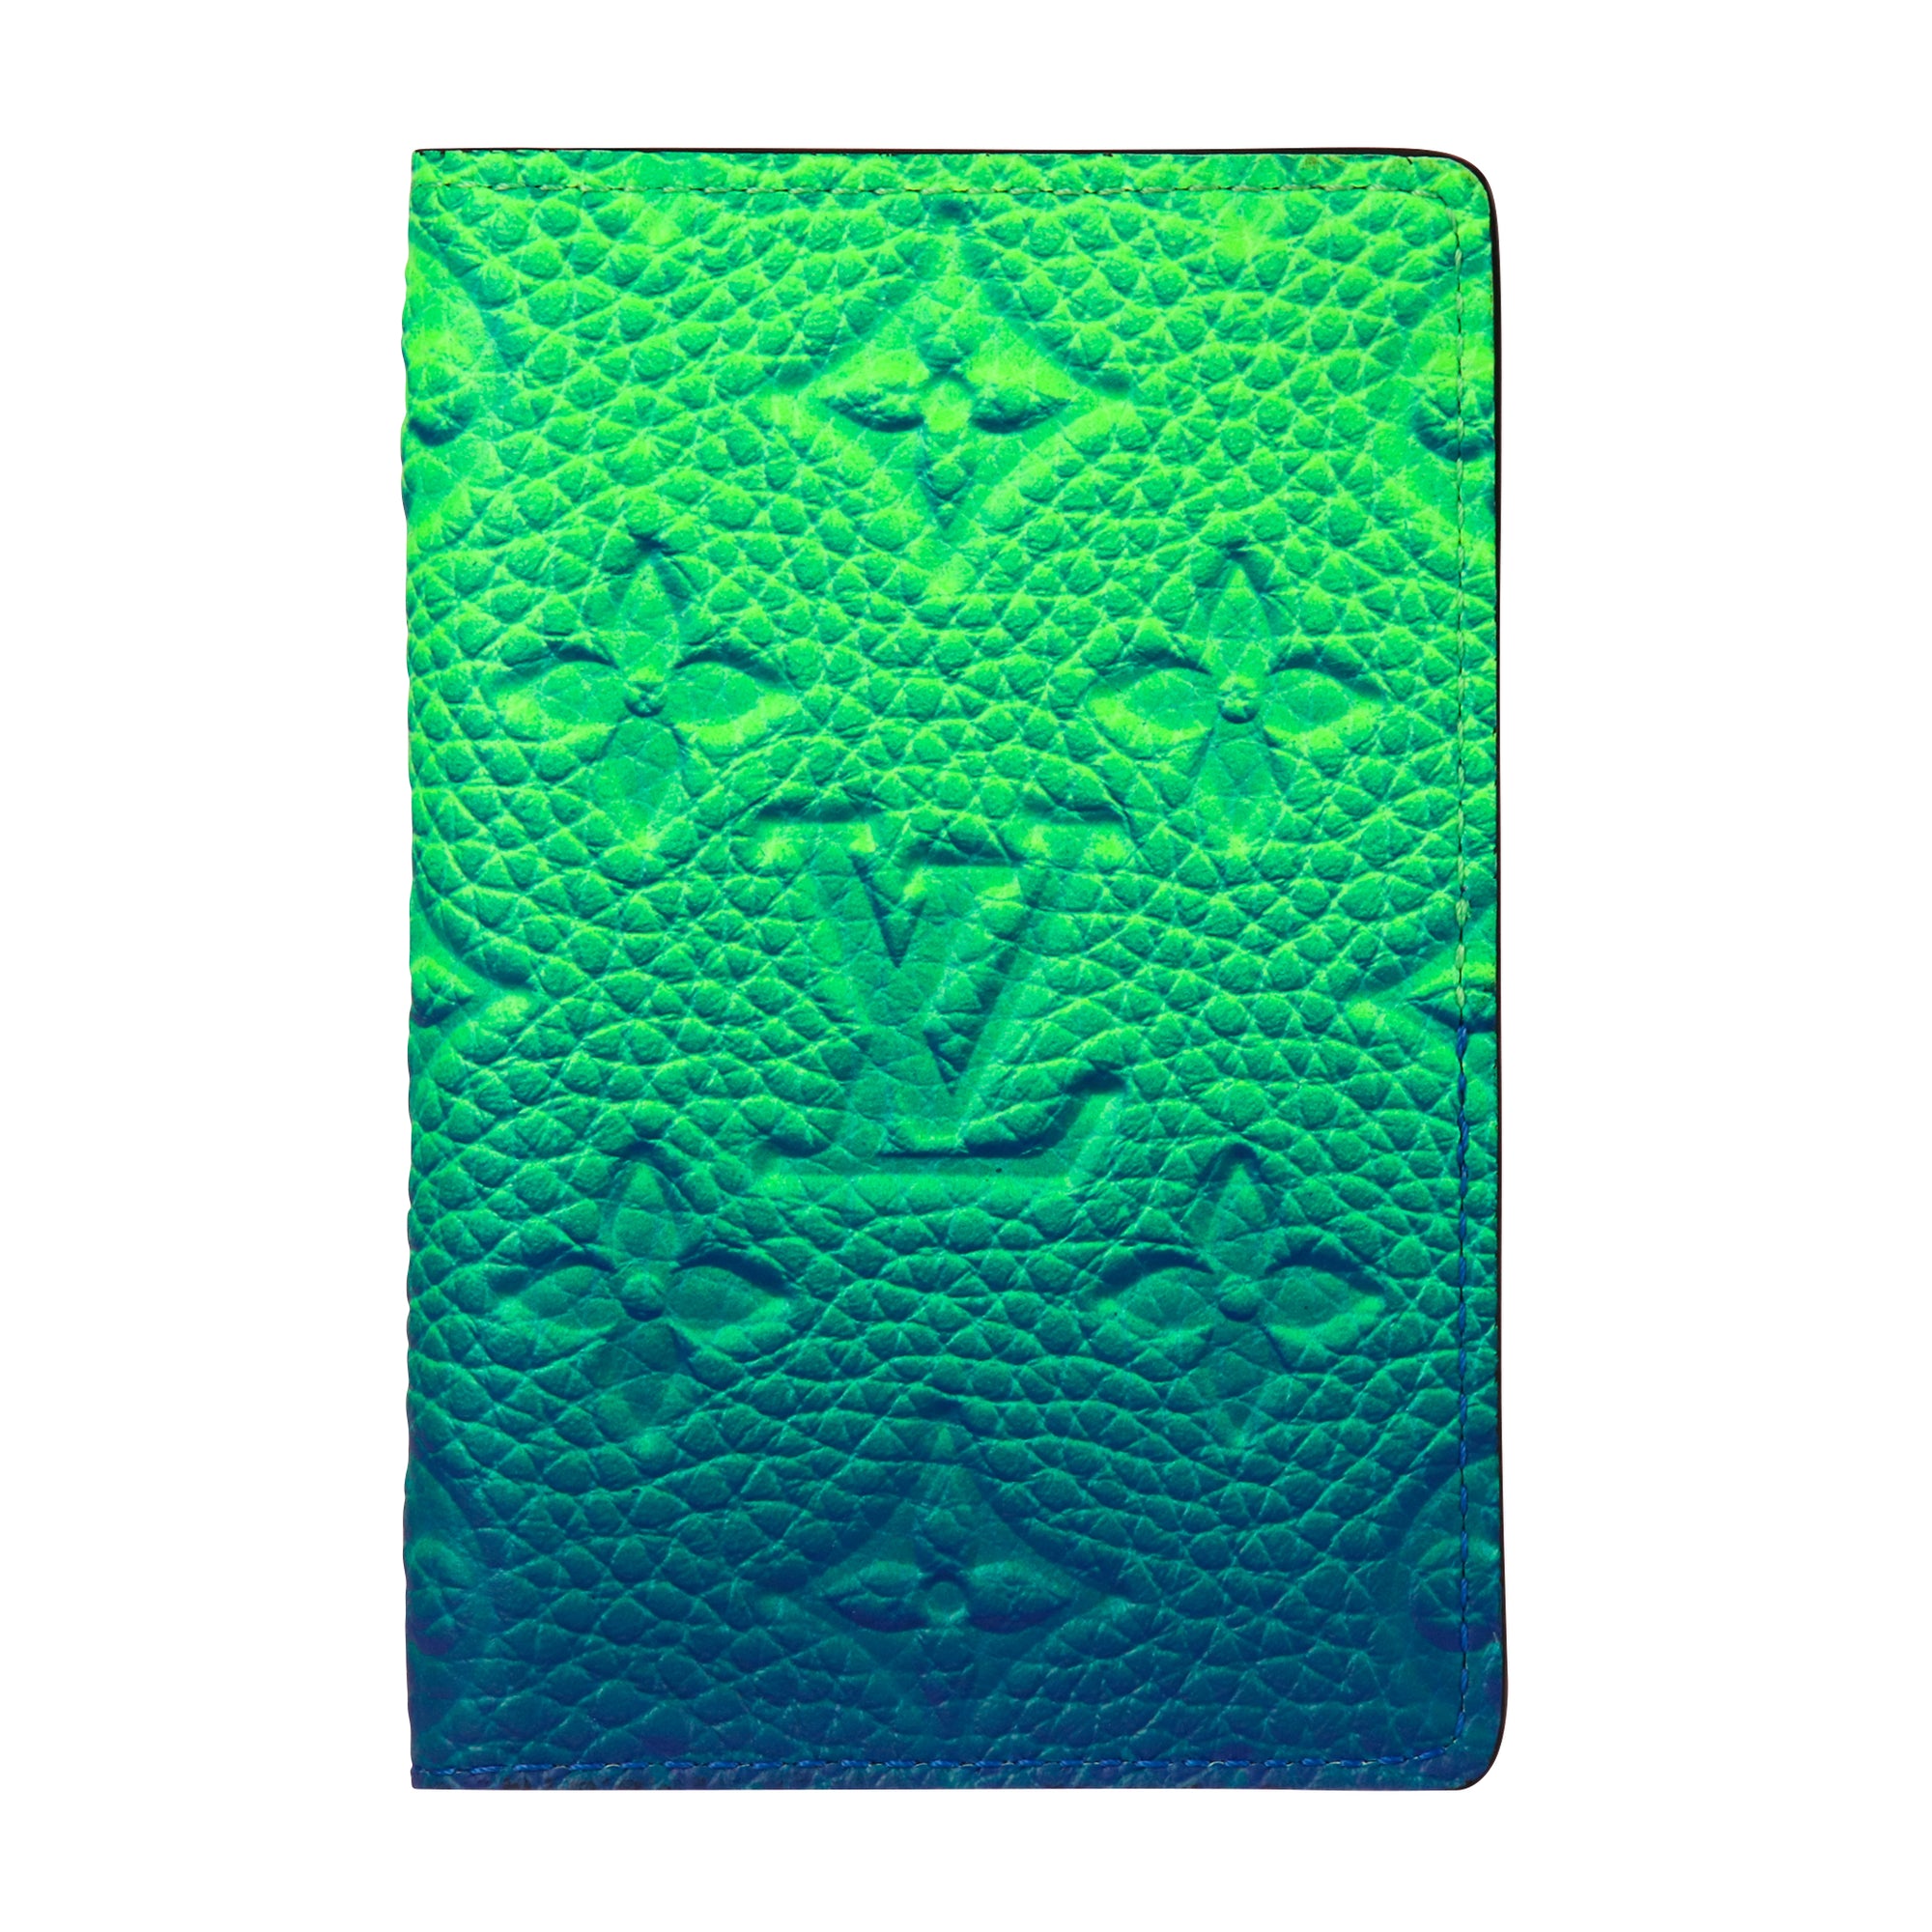 louis vuitton wallpaper for iphone, louis vuitton aesthetic wallpaper green  #